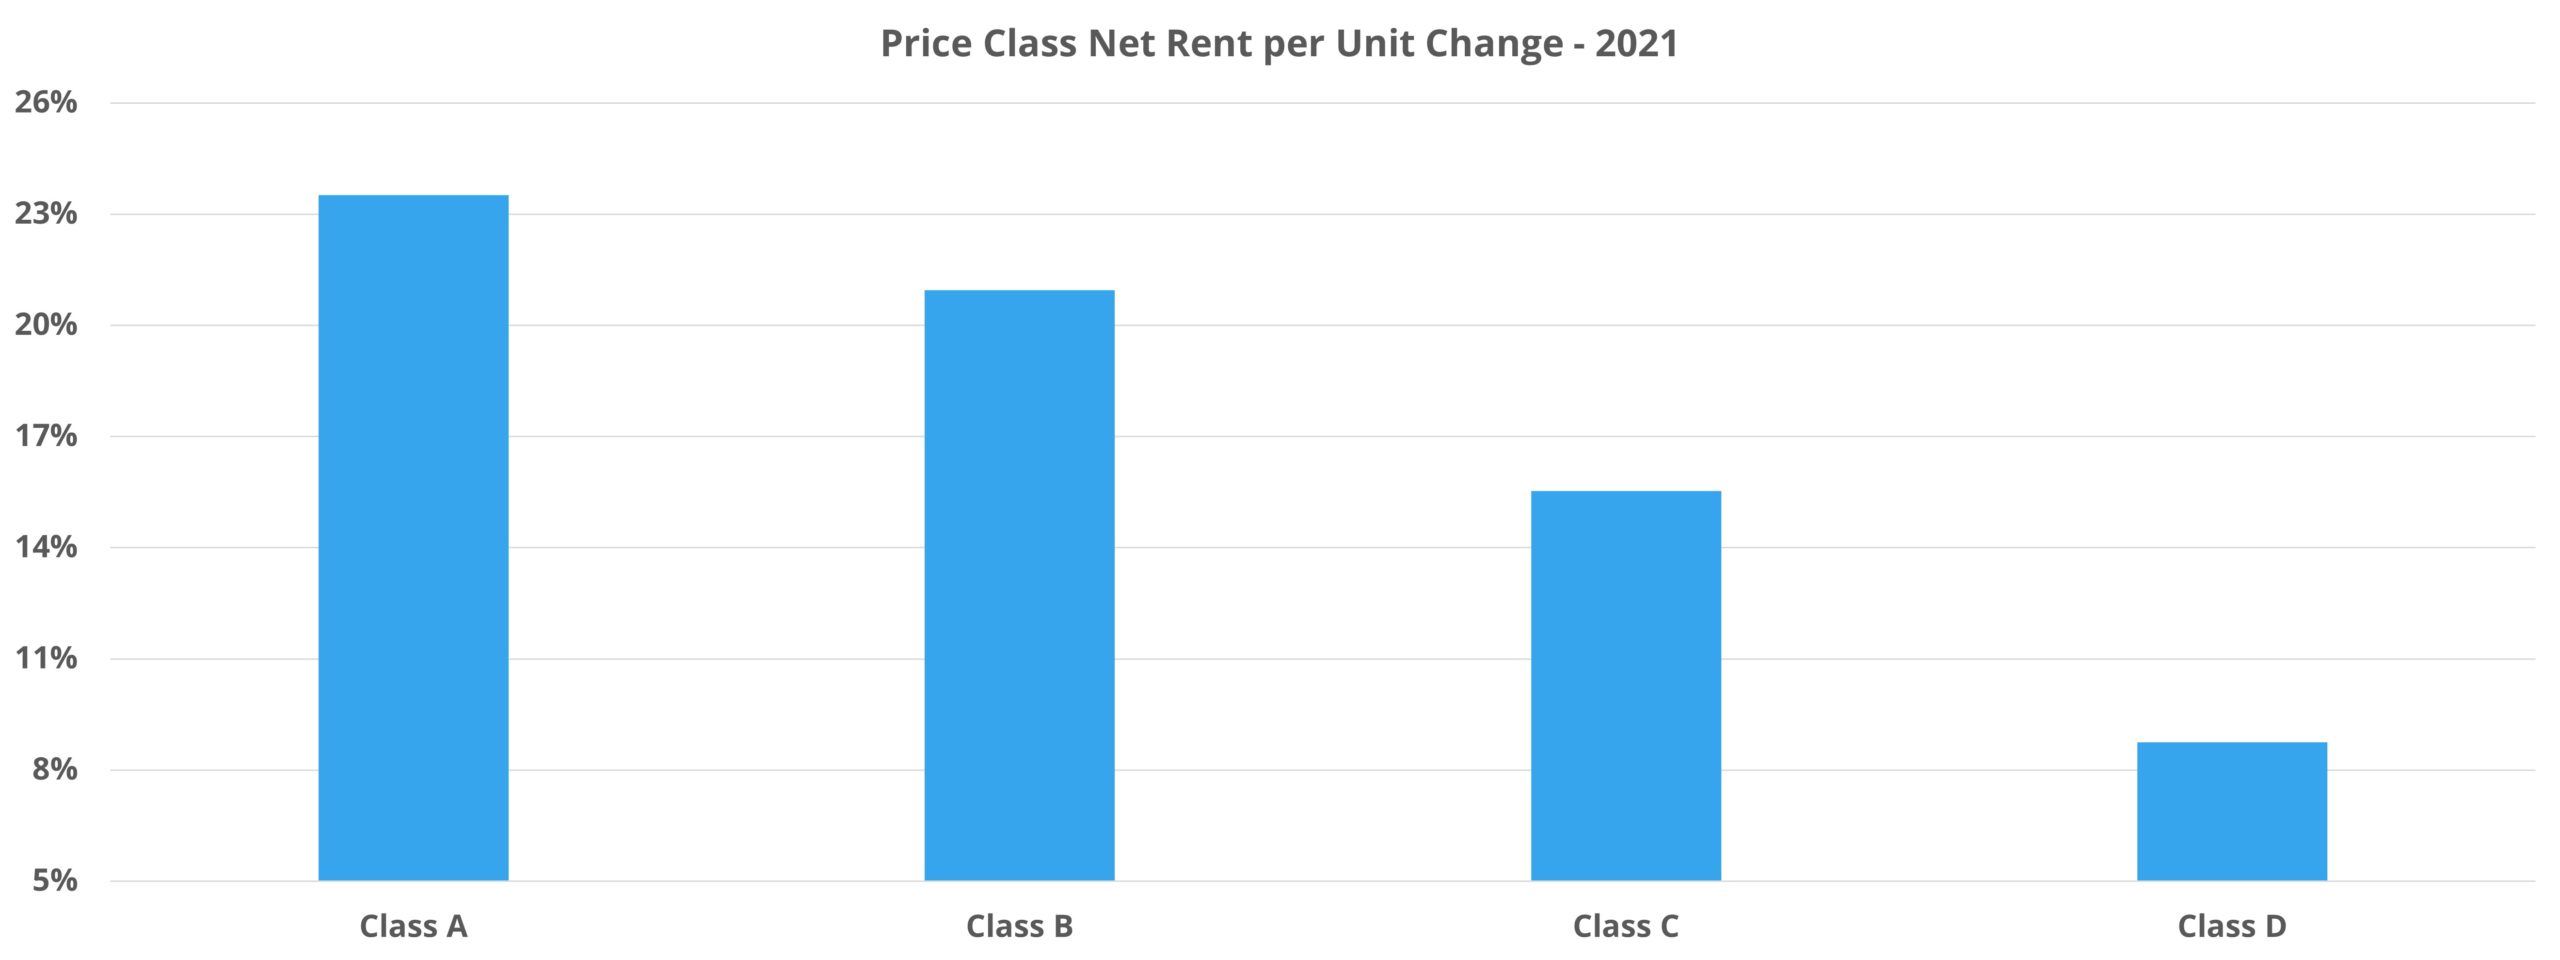 Price Class Net Rent per Unit Change - 2021